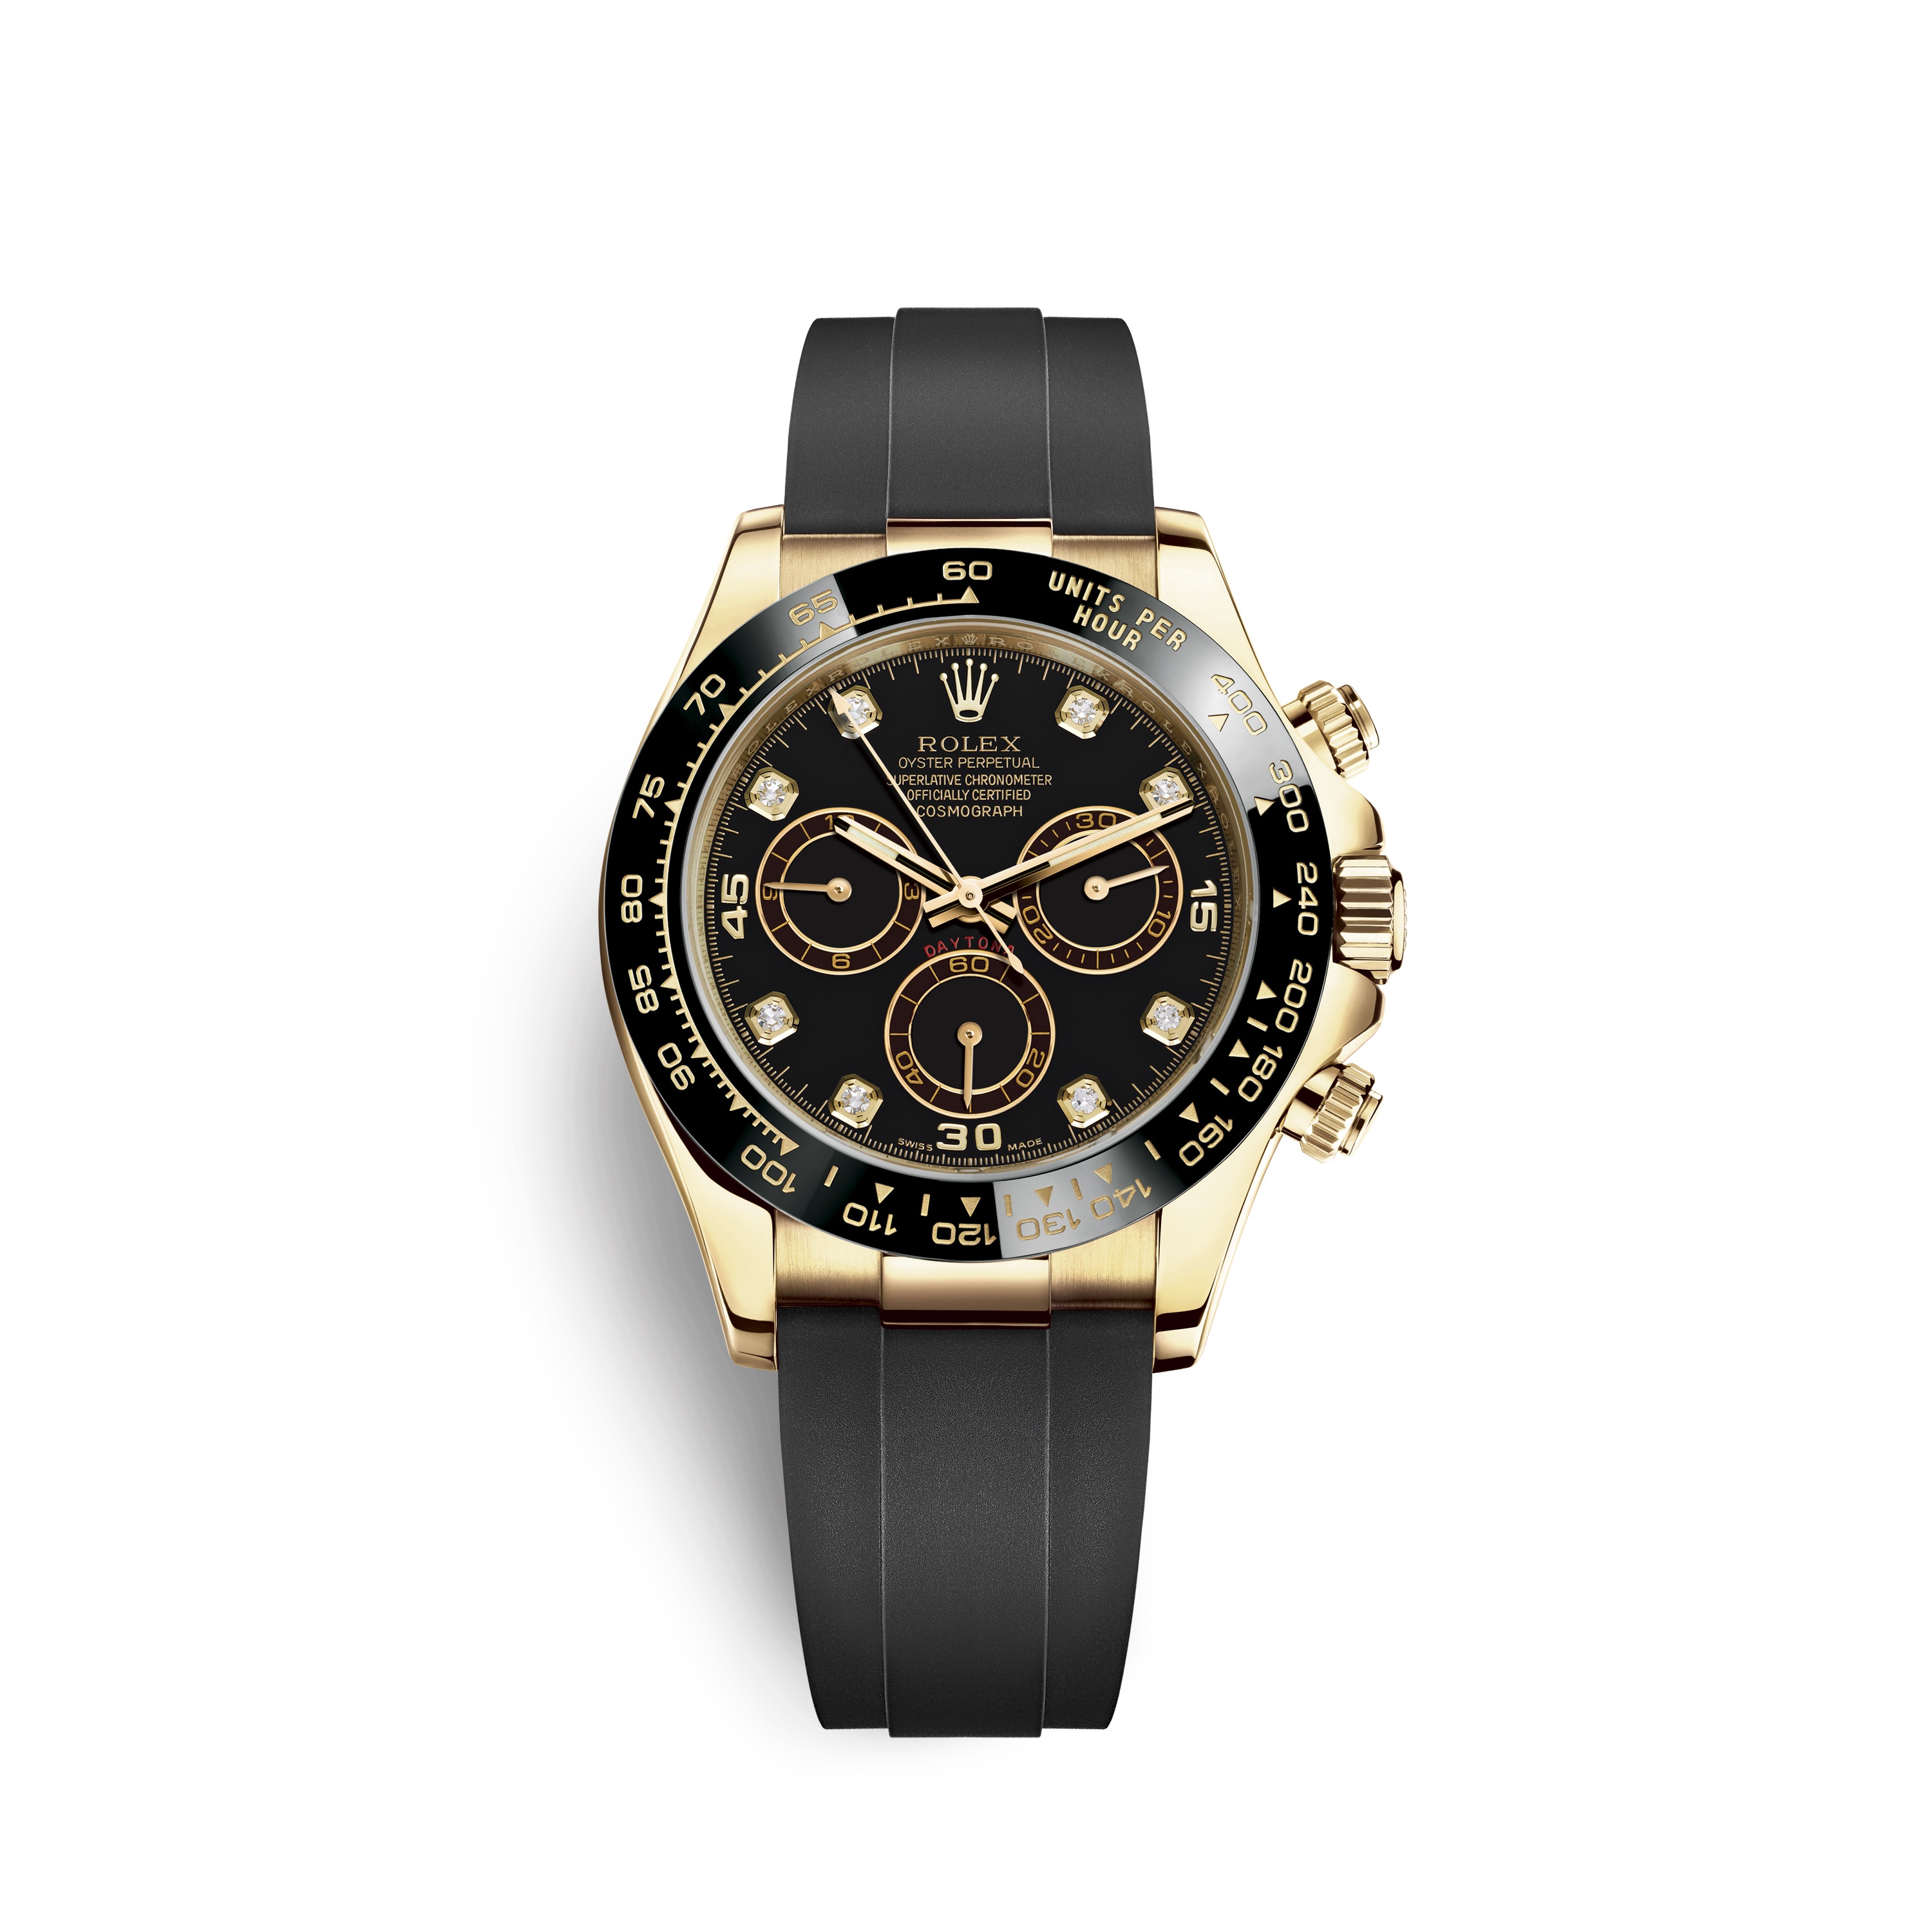 Cosmograph Daytona 116518LN Gold Watch (Black Set with Diamonds)